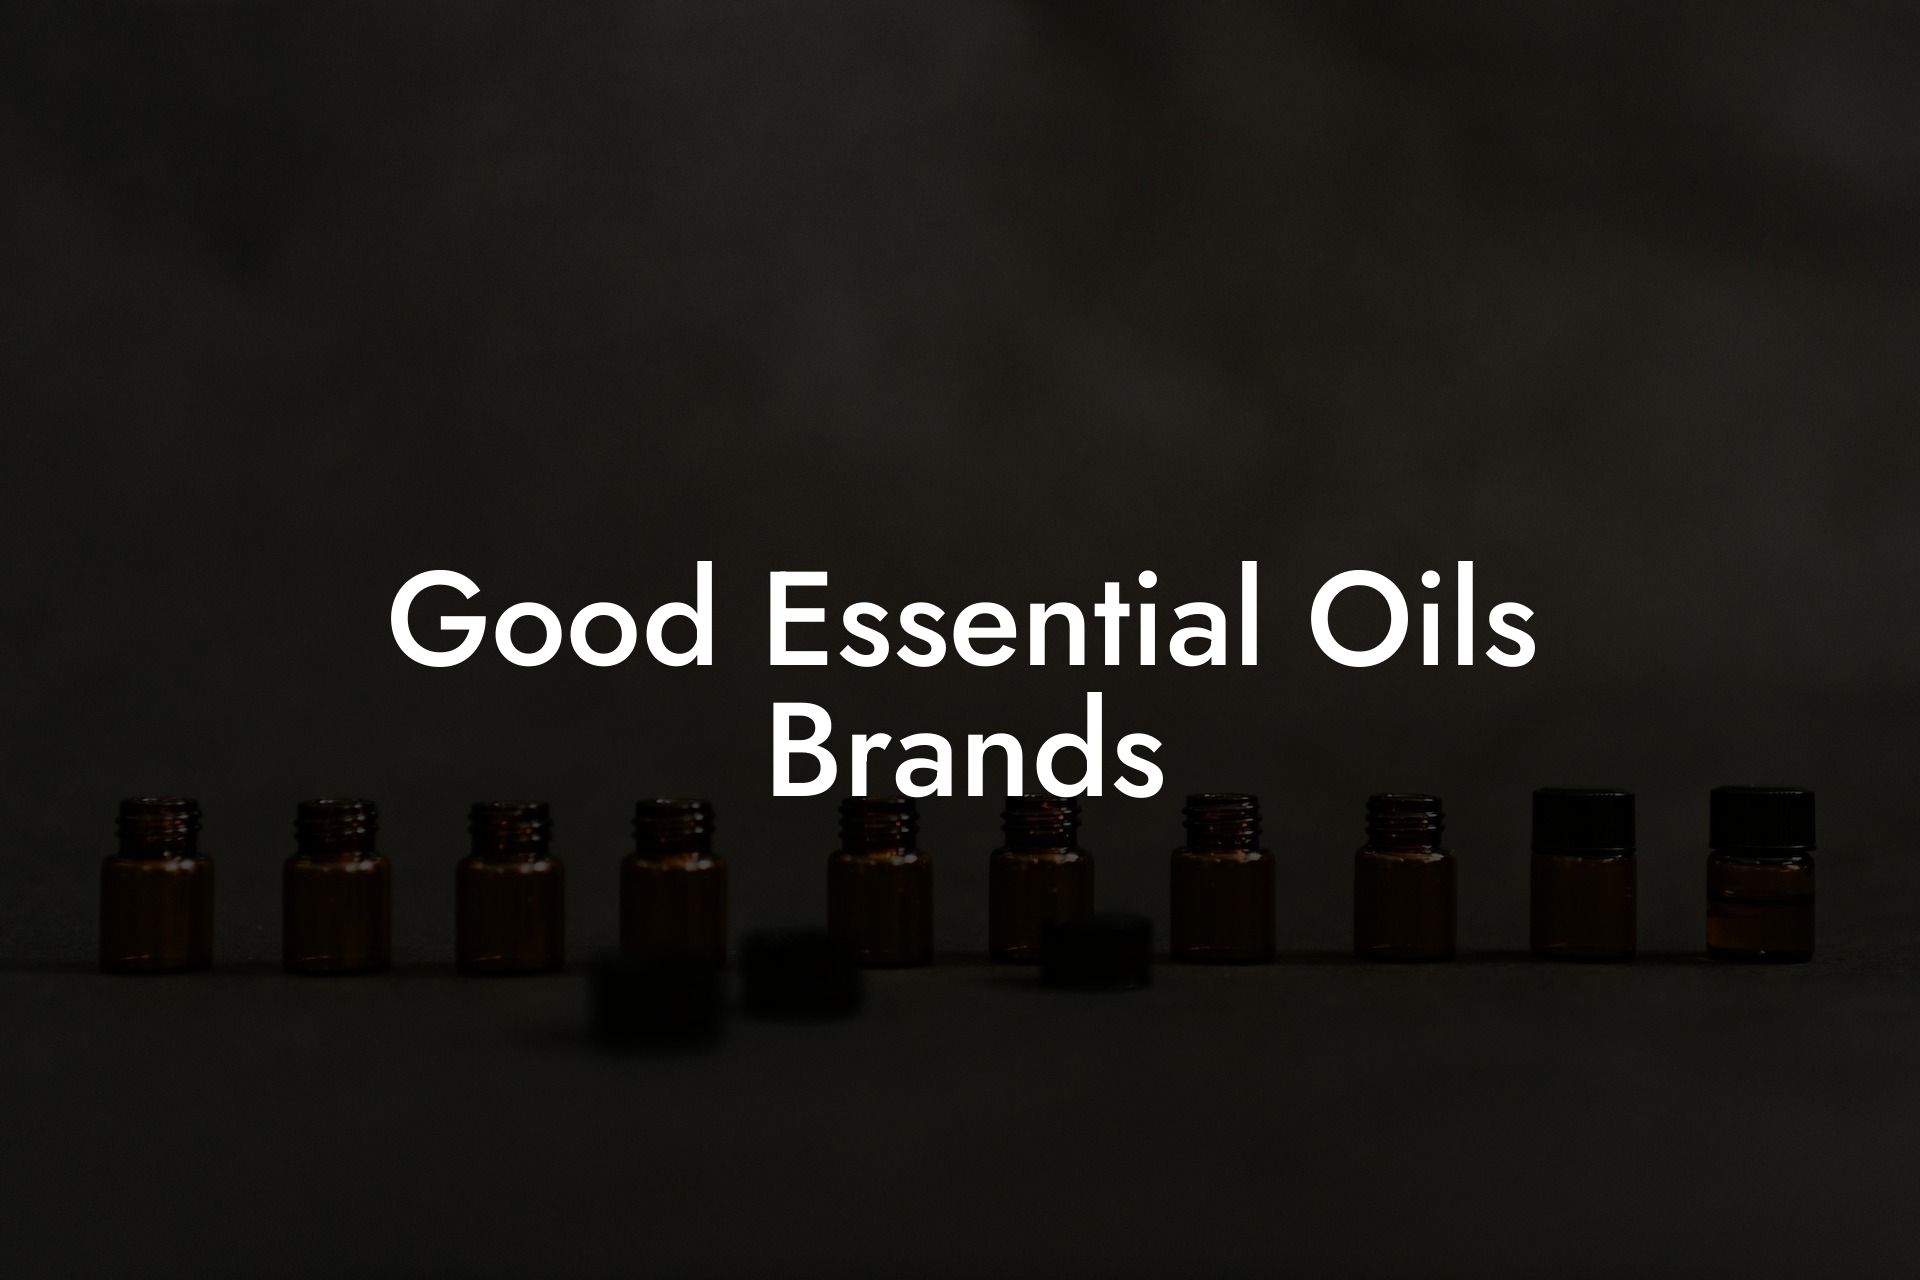 Good Essential Oils Brands